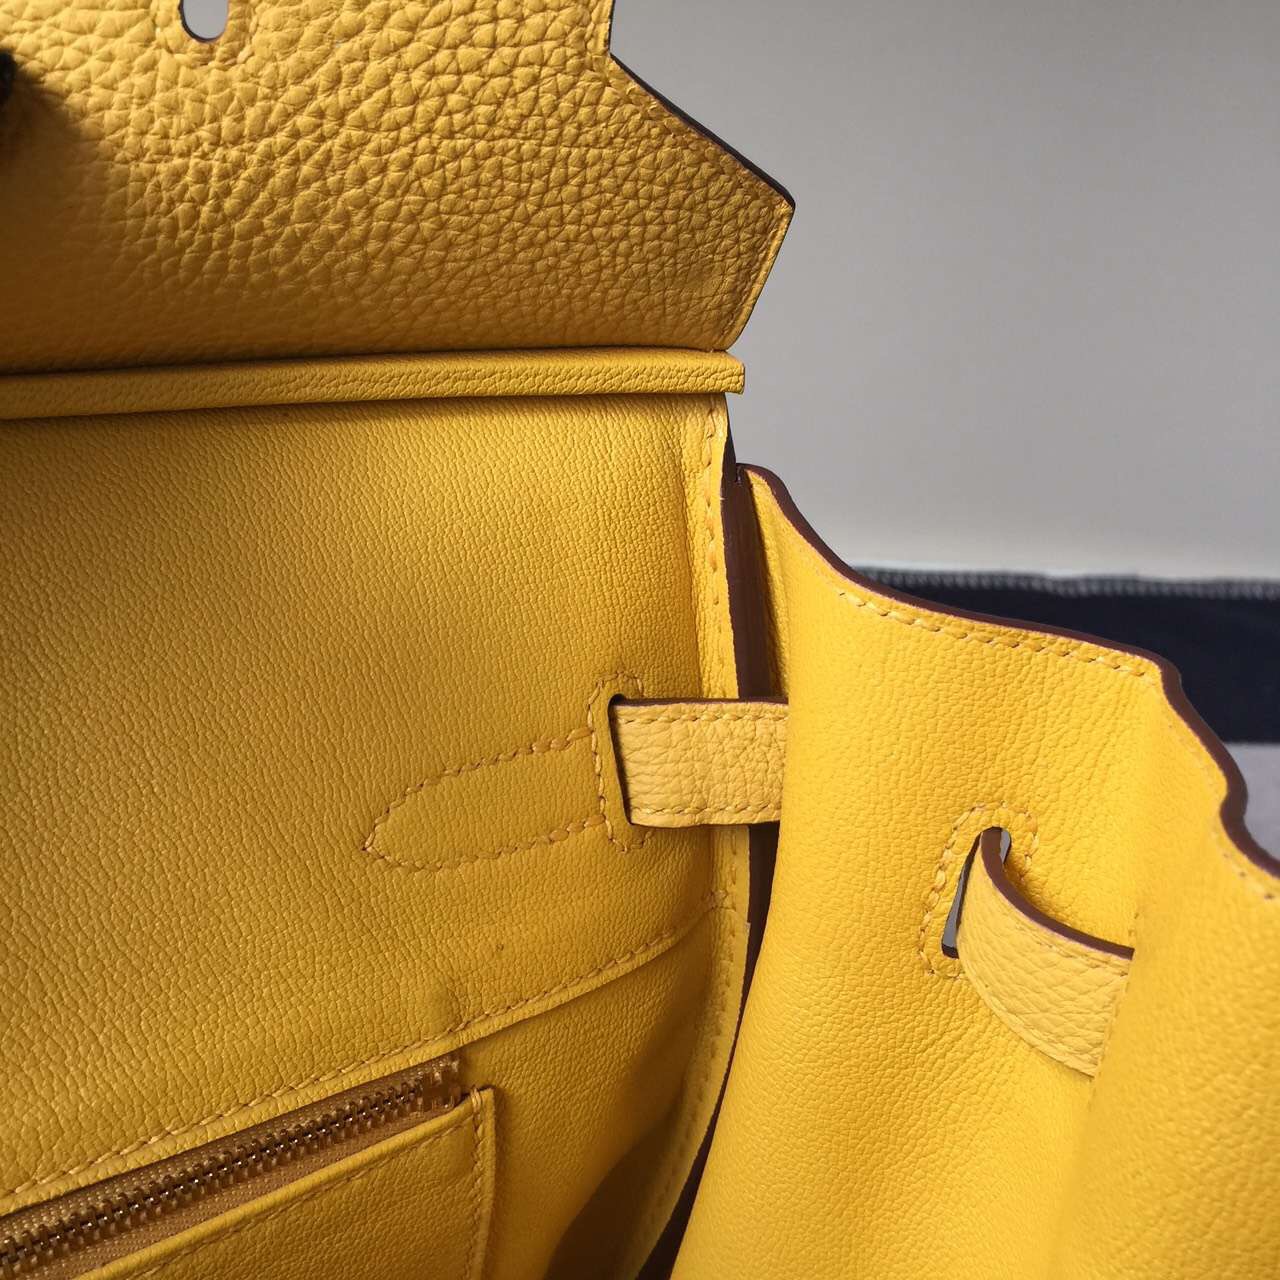 Discount Hermes Togo Calfskin Birkin35cm Bag in Fennel Yellow